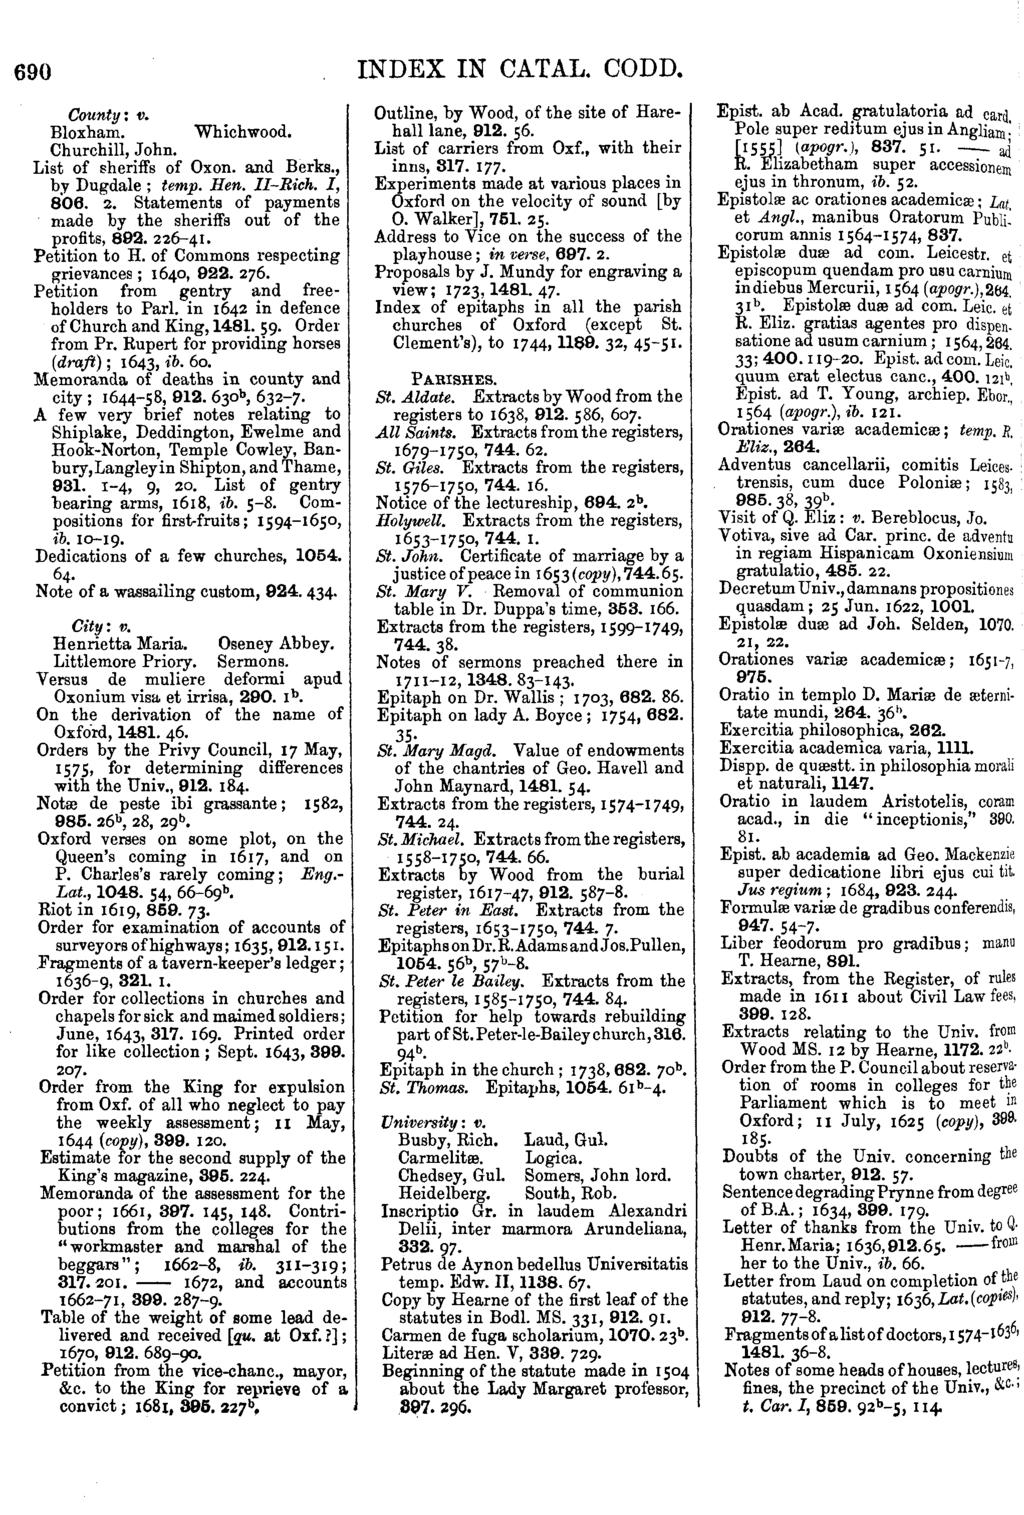 690 County: v. Bloxham. Whichwood. Churchill, John. List of sheriffs of Oxon. and Berks., by Dugdale; temp. Hen. II-Rich. I, 806. 2.